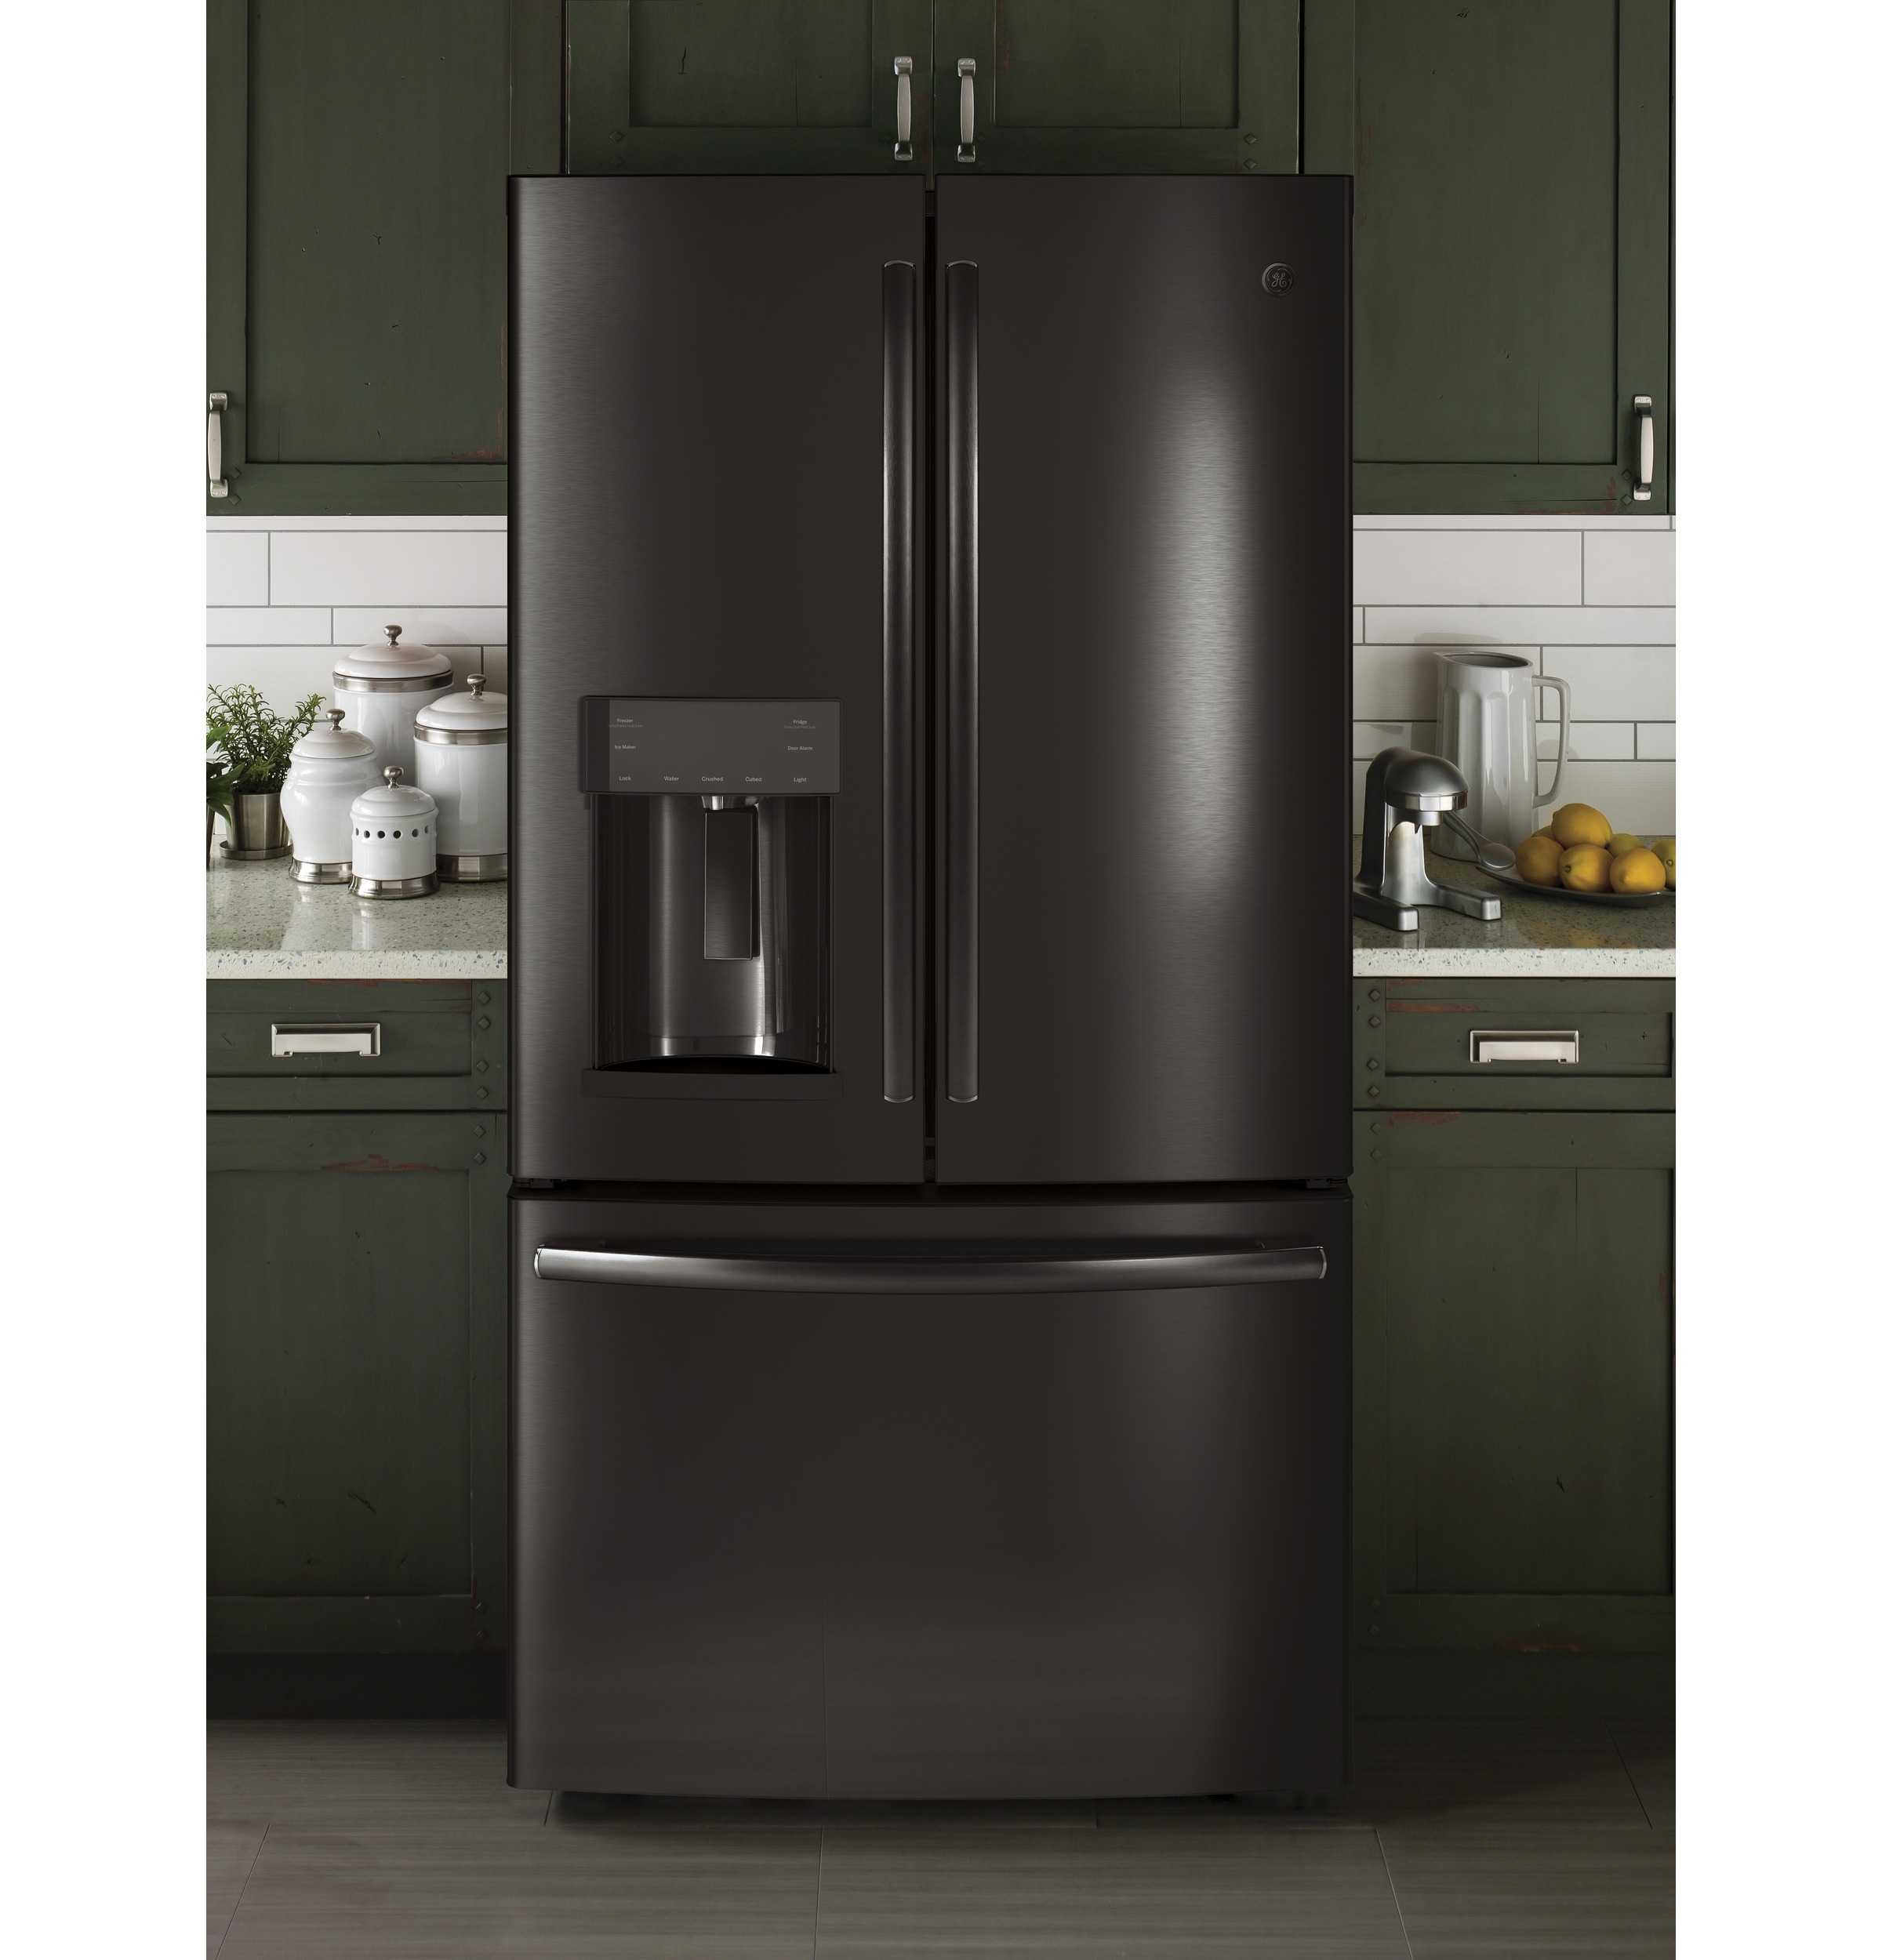 44+ Ge elite counter depth refrigerator ideas